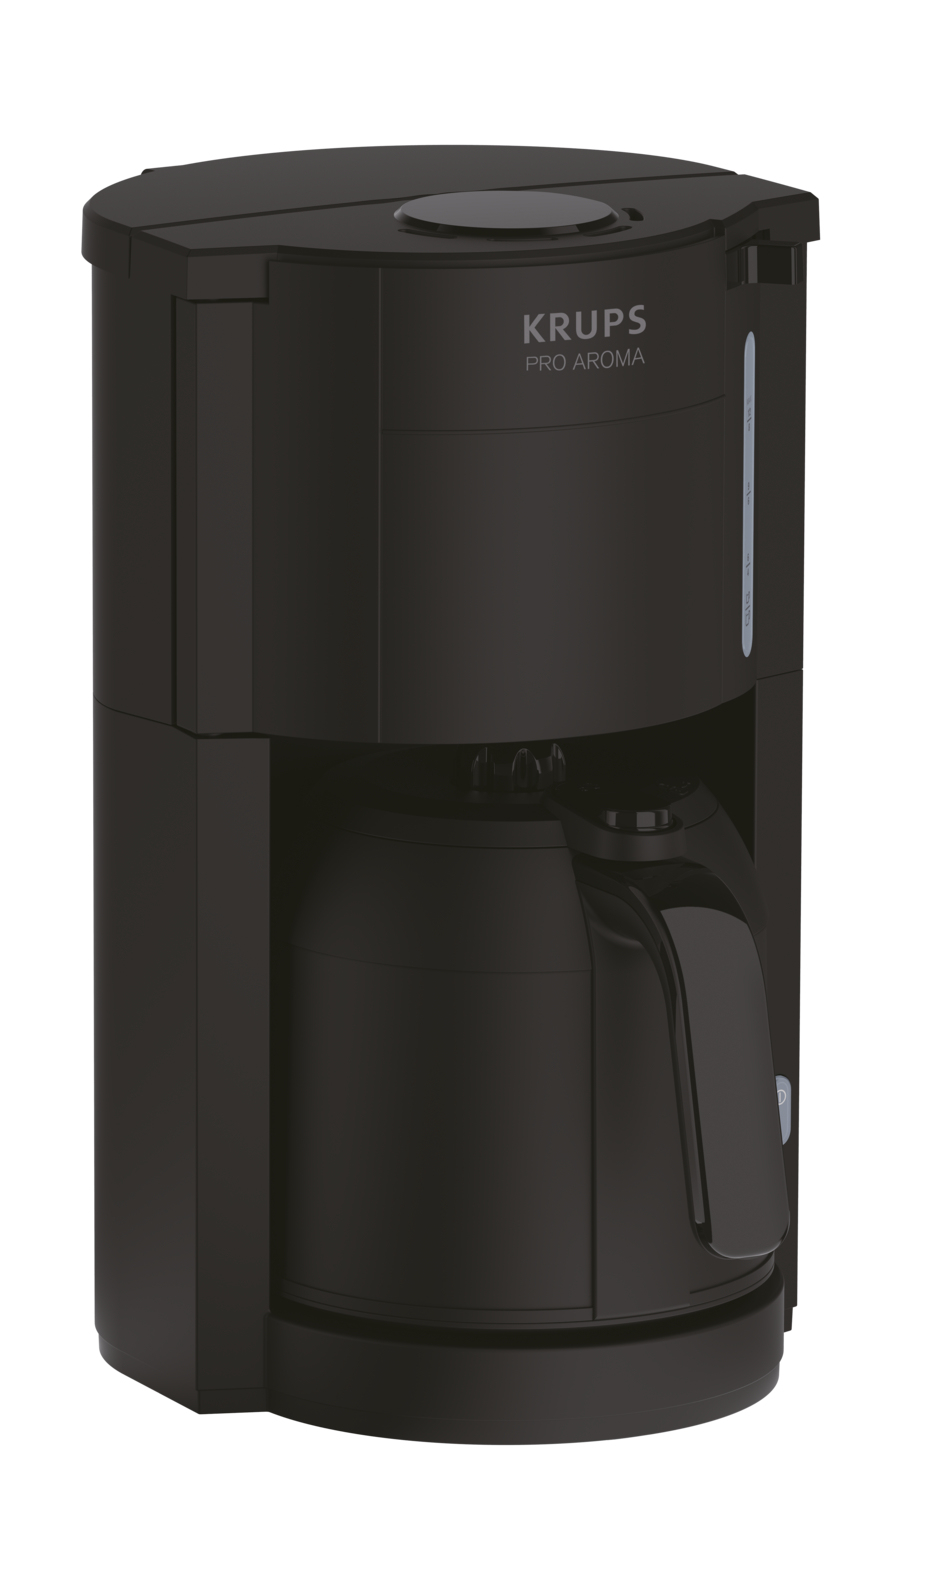 Krups Pro Aroma KM3038 coffee maker